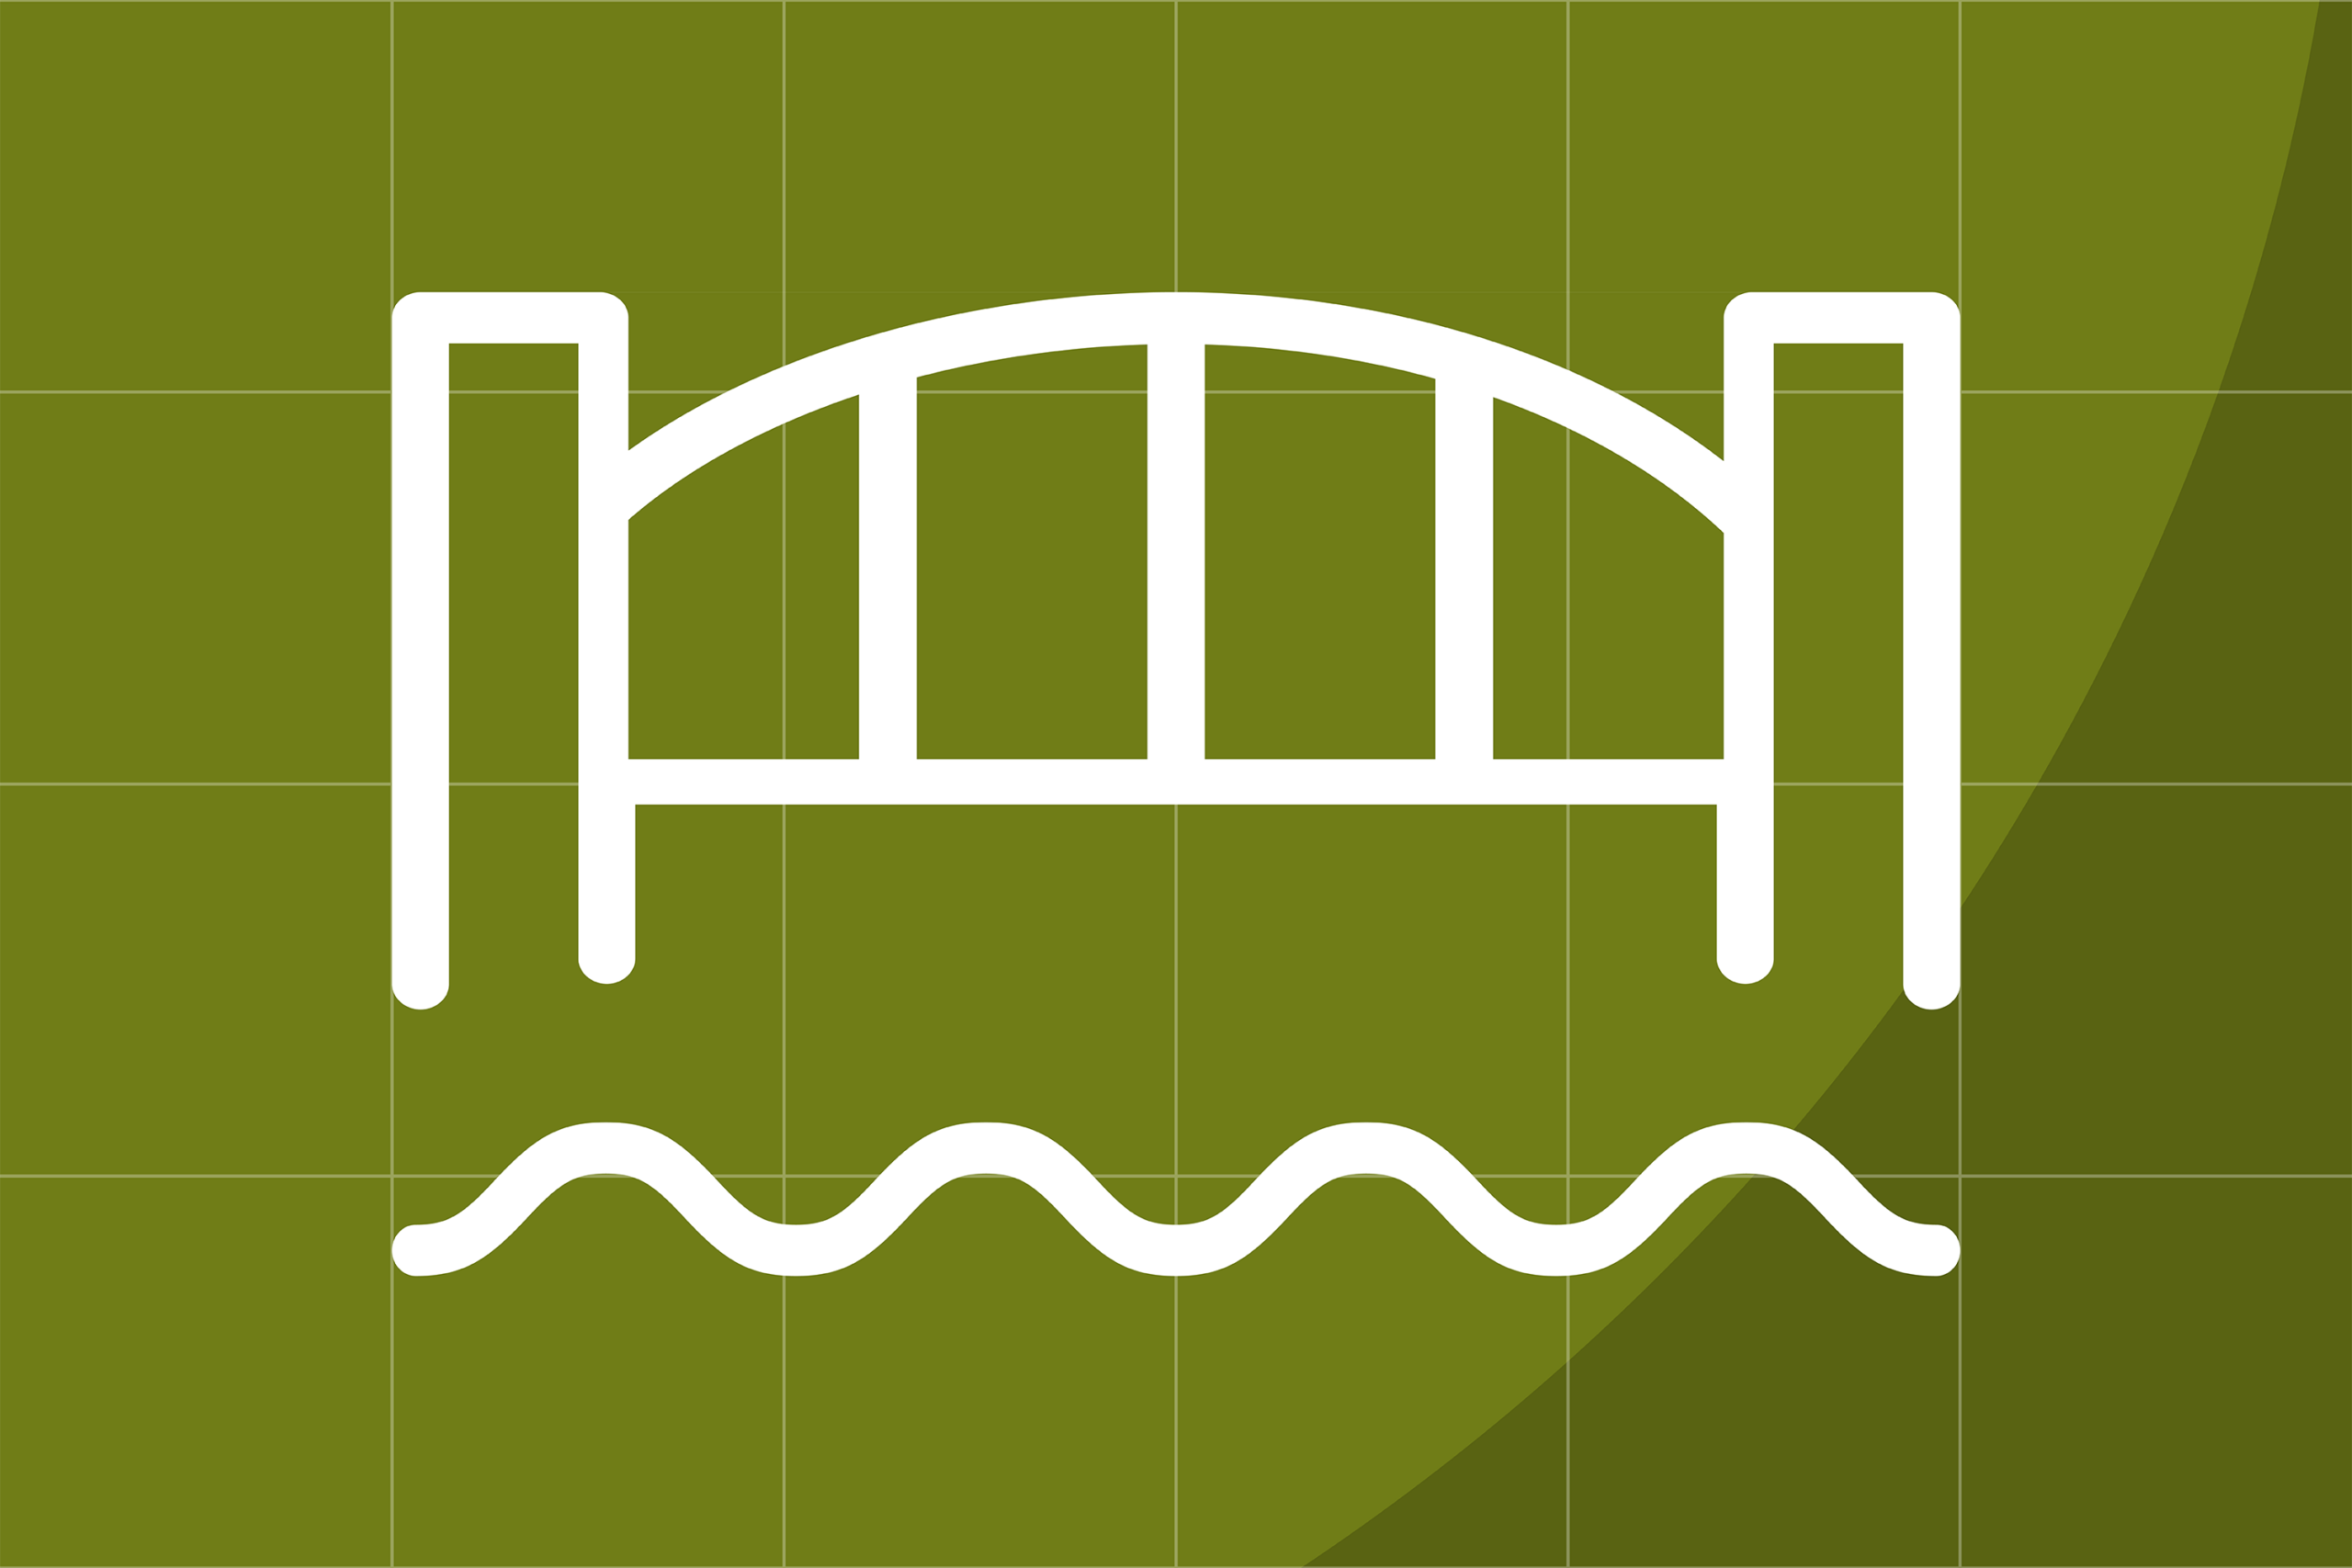 podcast cover art: bridge over water